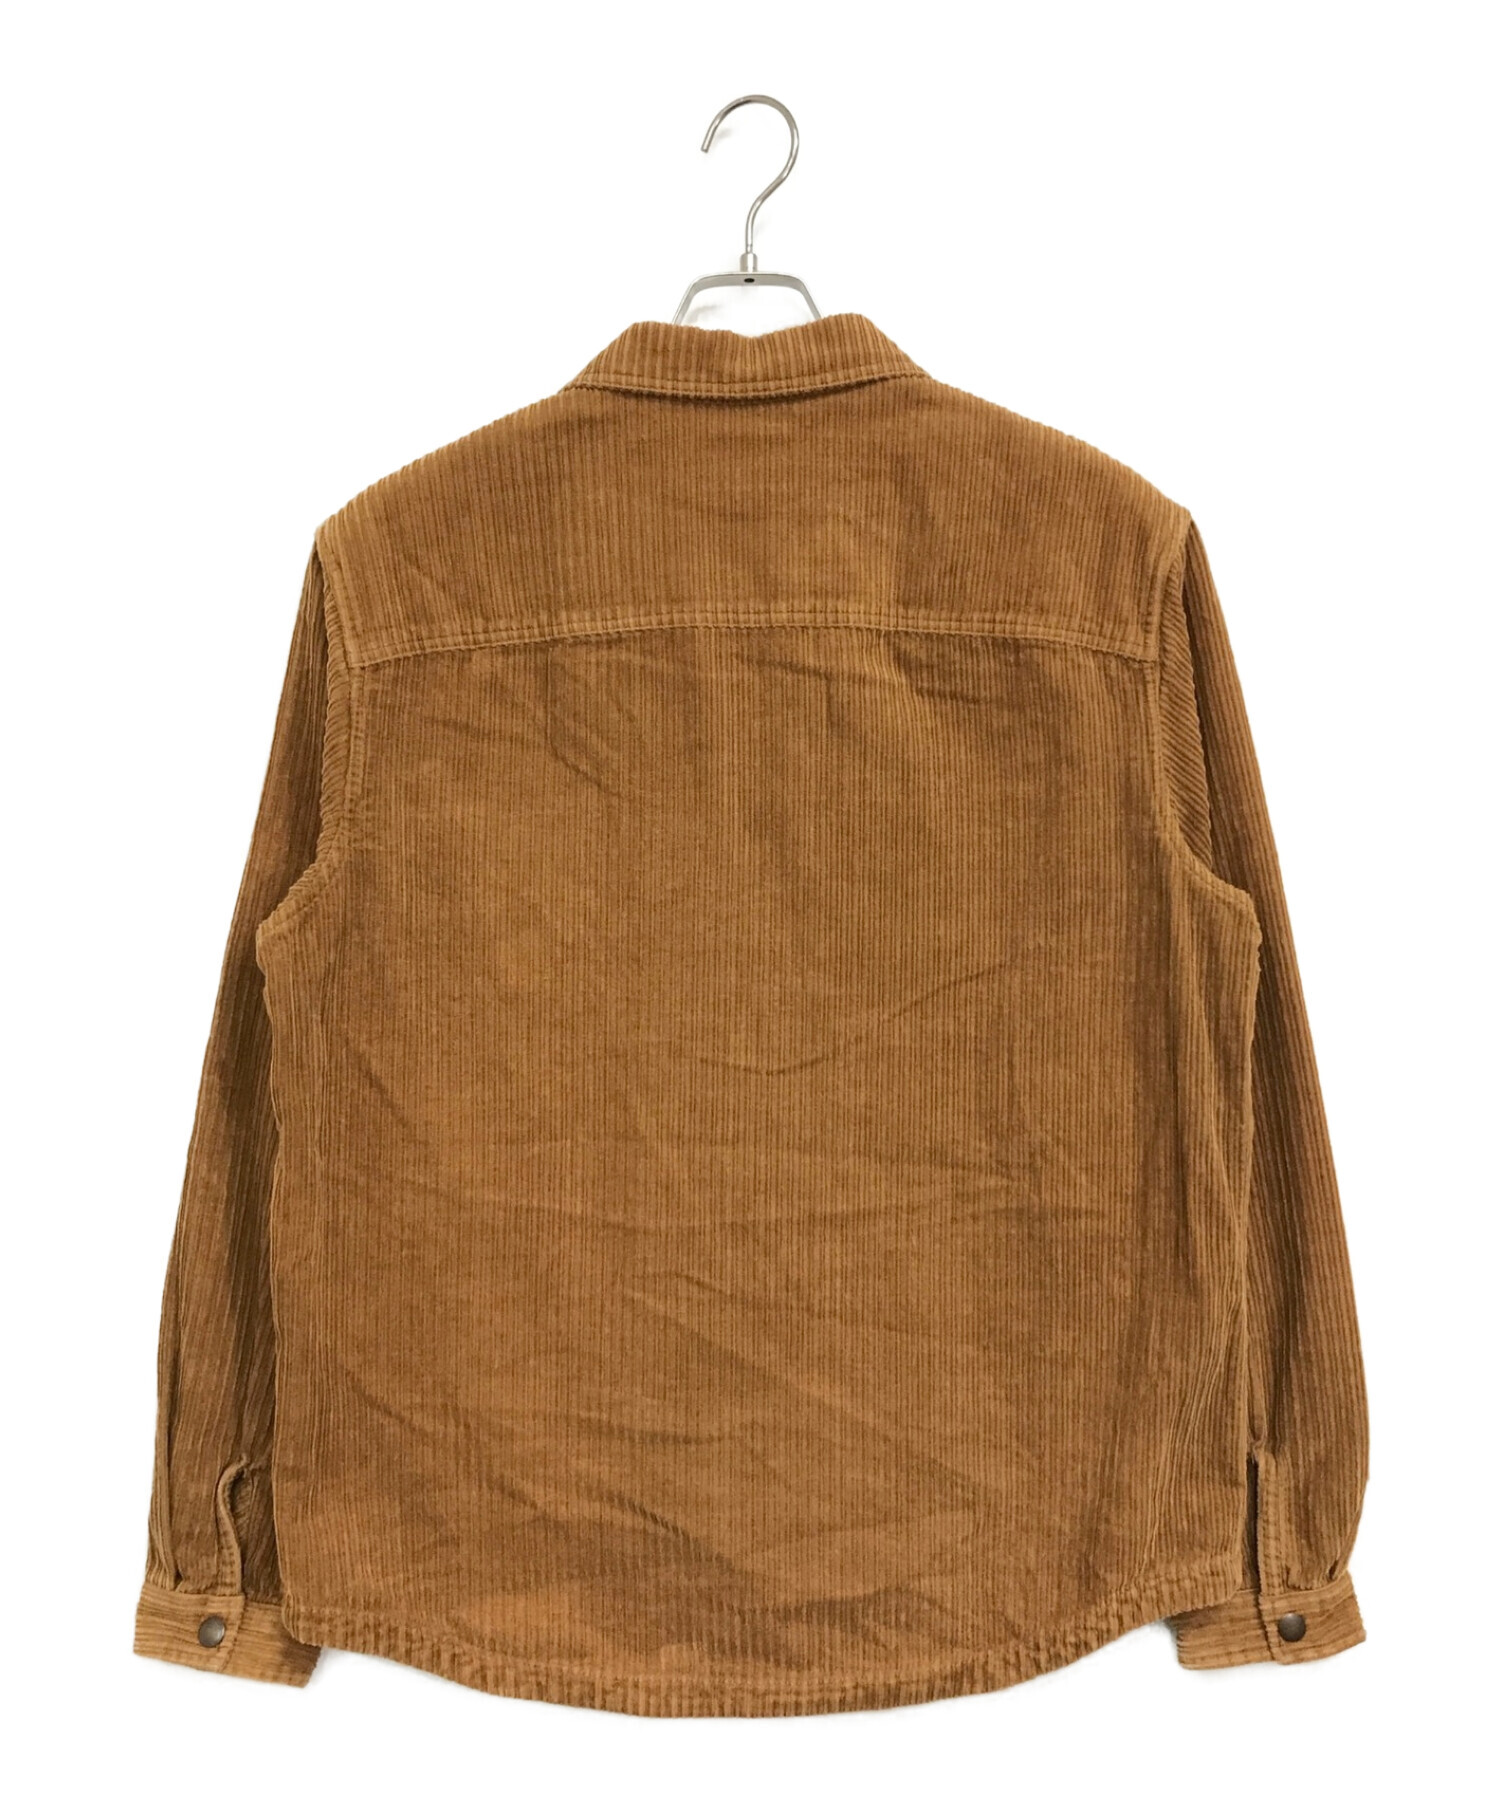 SUPREME (シュプリーム) コーデュロイジップシャツ 17AW Corduroy Zip Up Shirt ブラウン サイズ:M